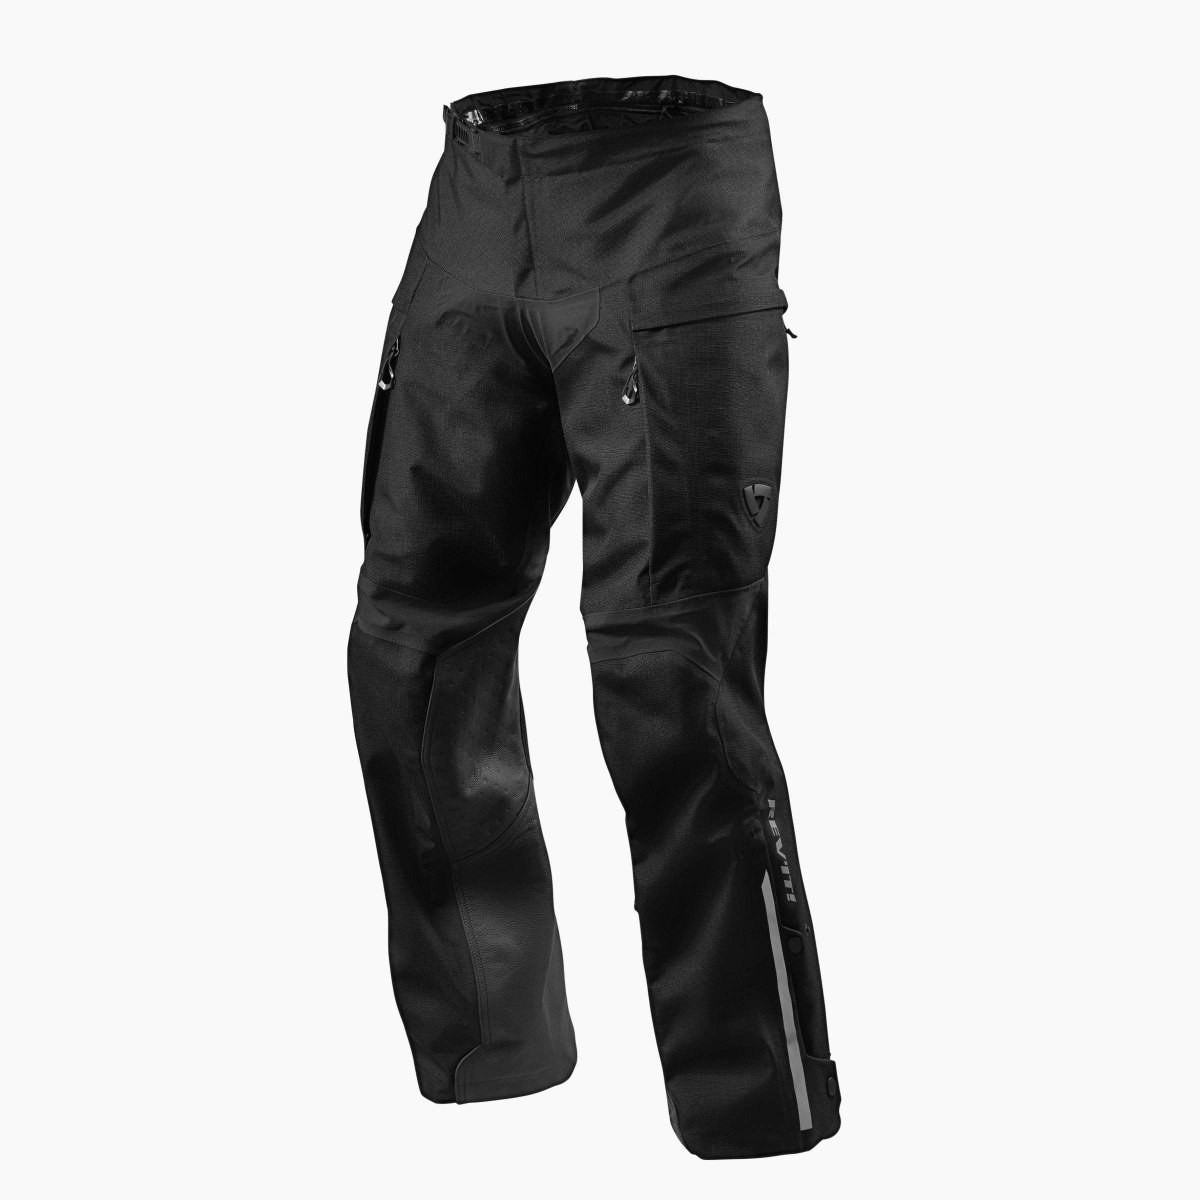 Image of REV'IT! Component H2O Standard Black Motorcycle Pants Size L EN